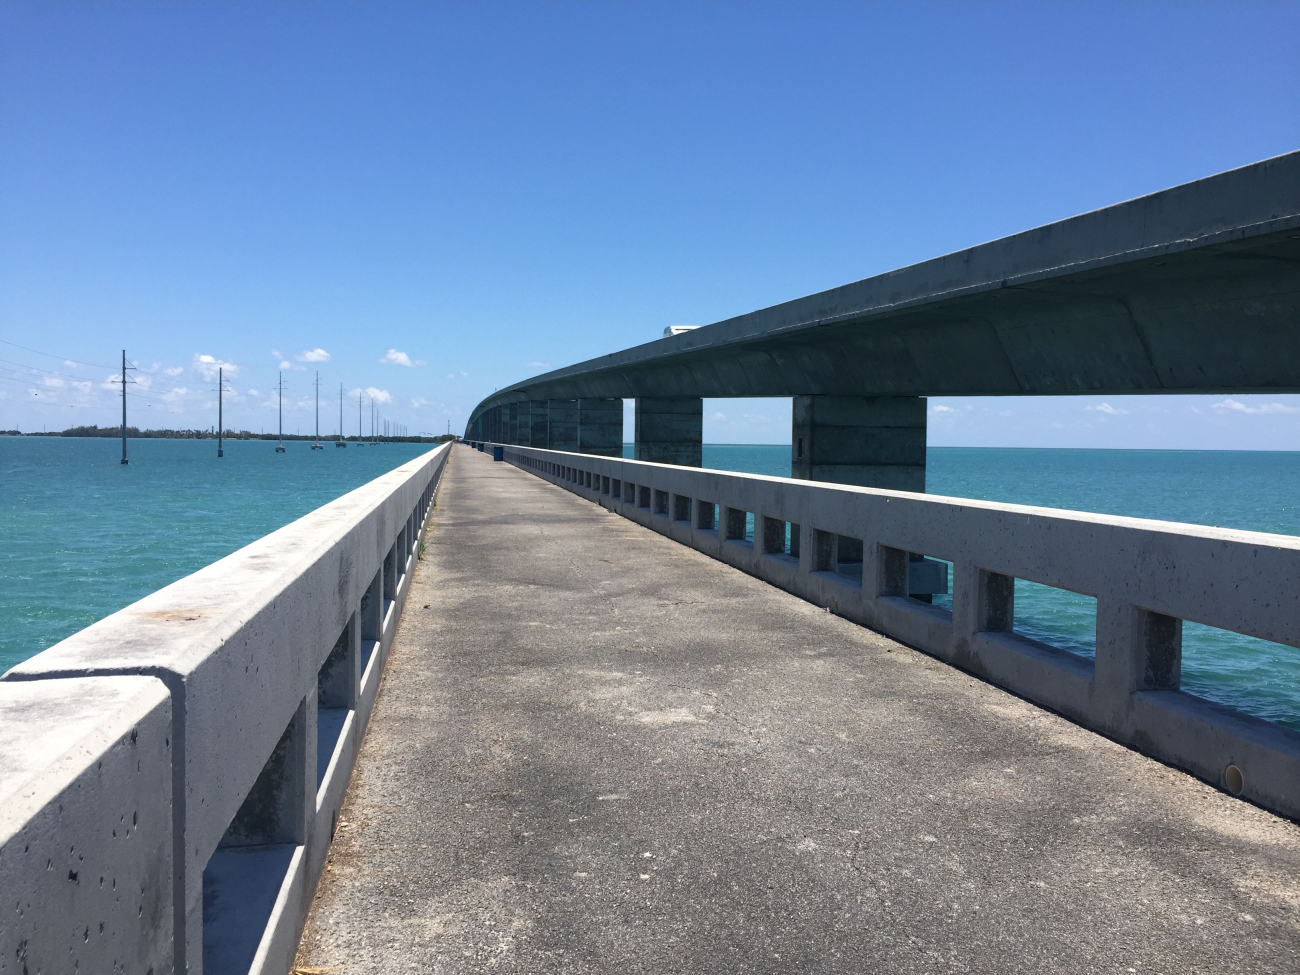 Walking path next to the Overseas Highway traversing the Florida Keys